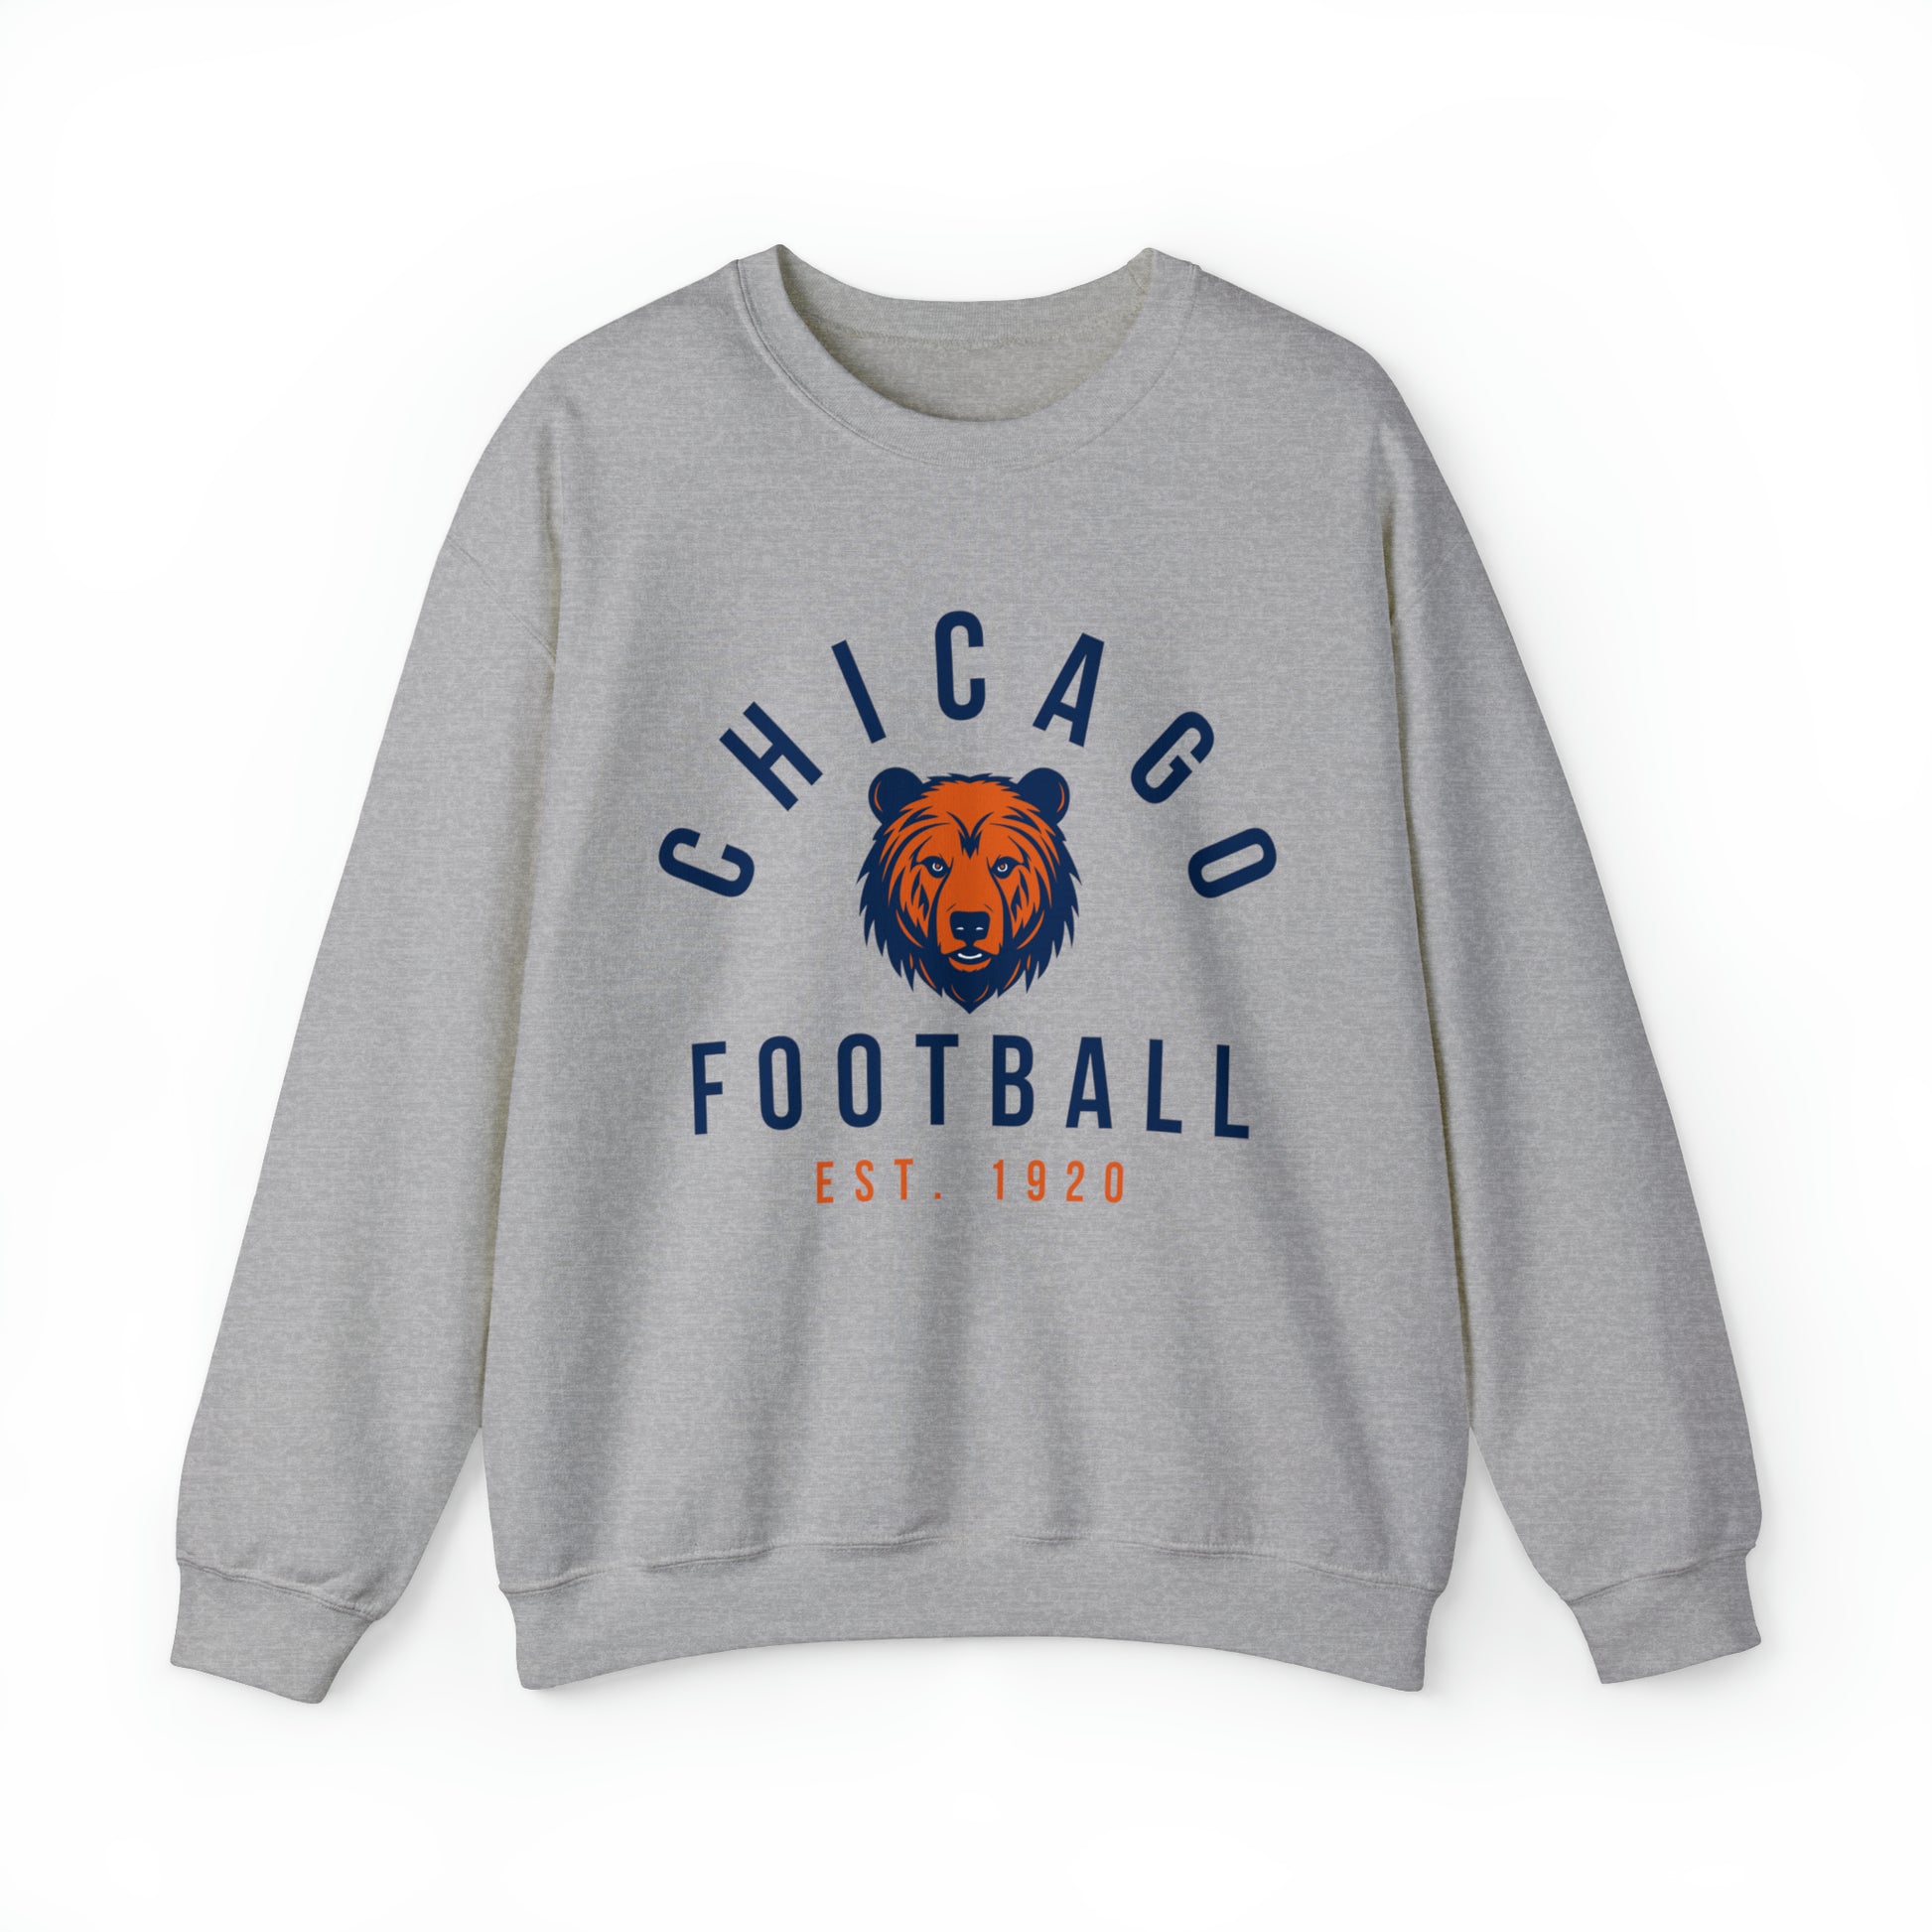 Gray Chicago Bears Crewneck Sweatshirt - Vintage Football - Retro Style Football Apparel - Design 4